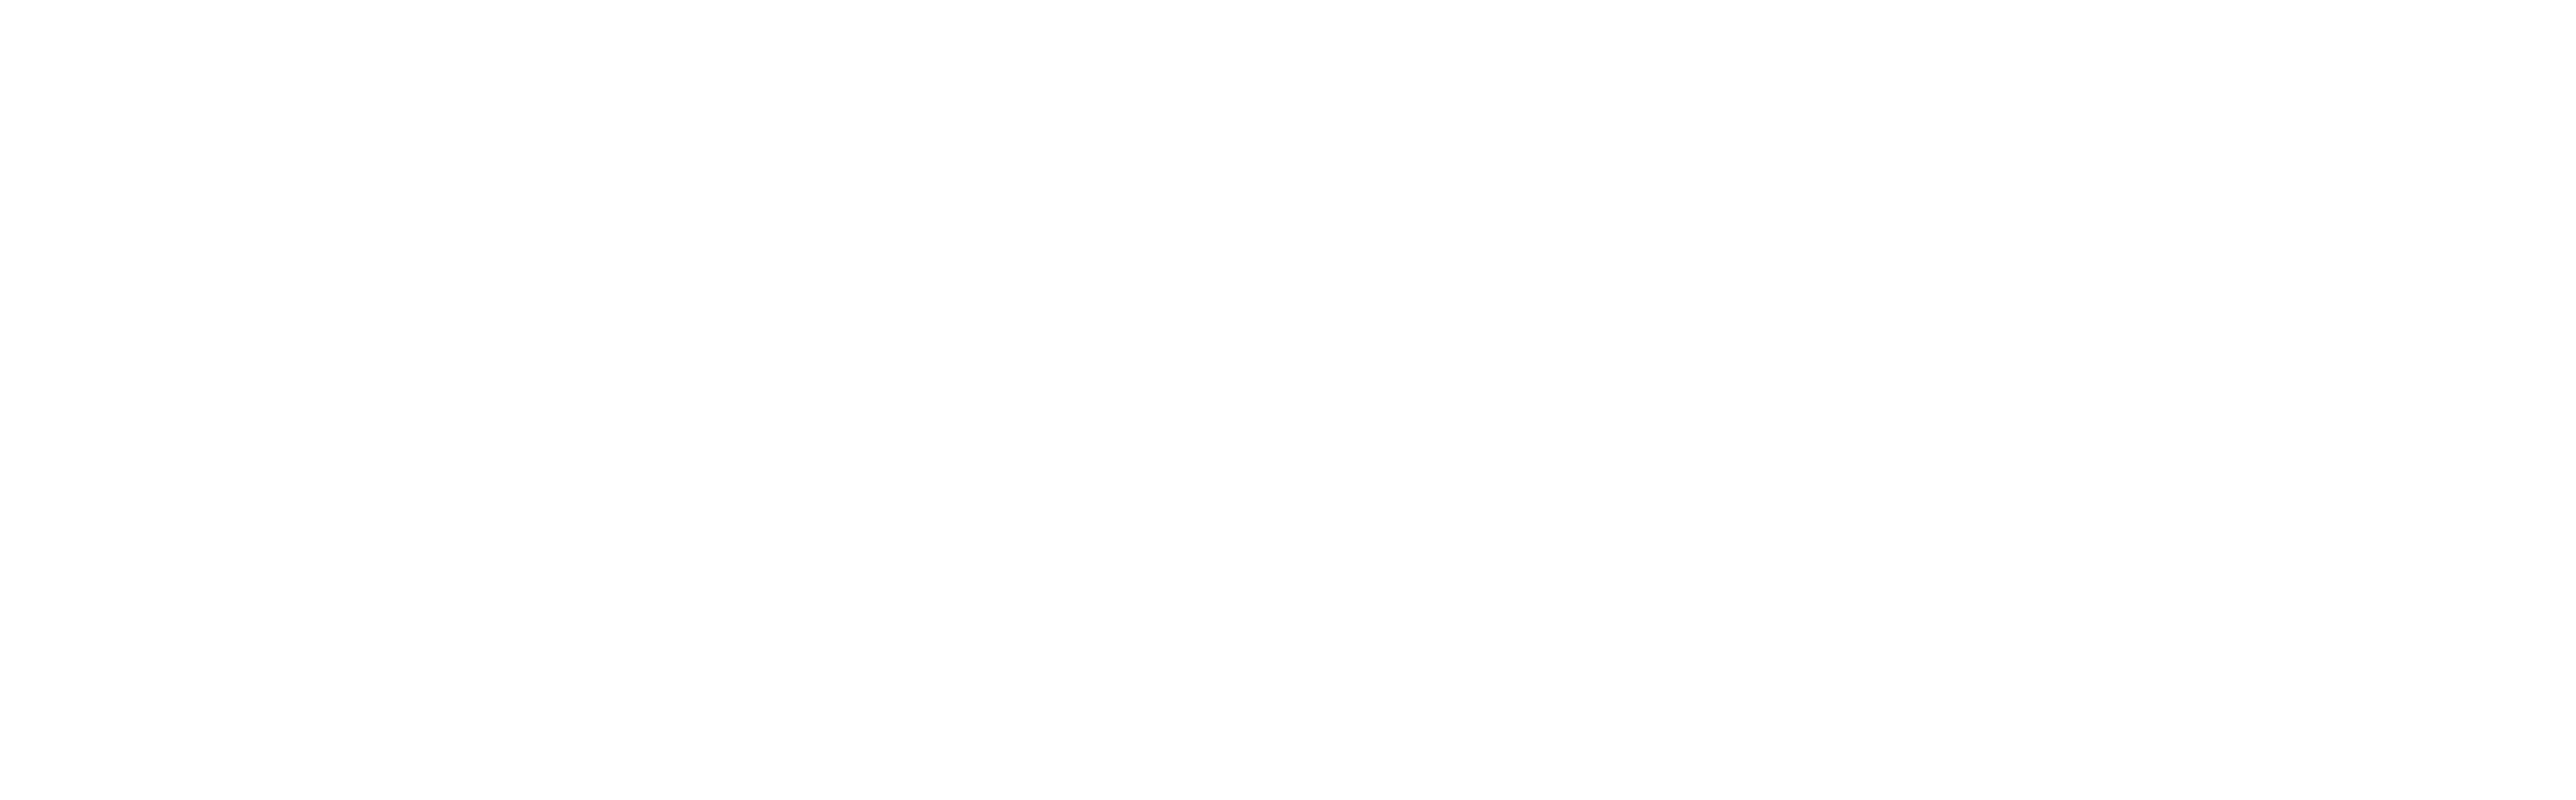 startup norway logo white